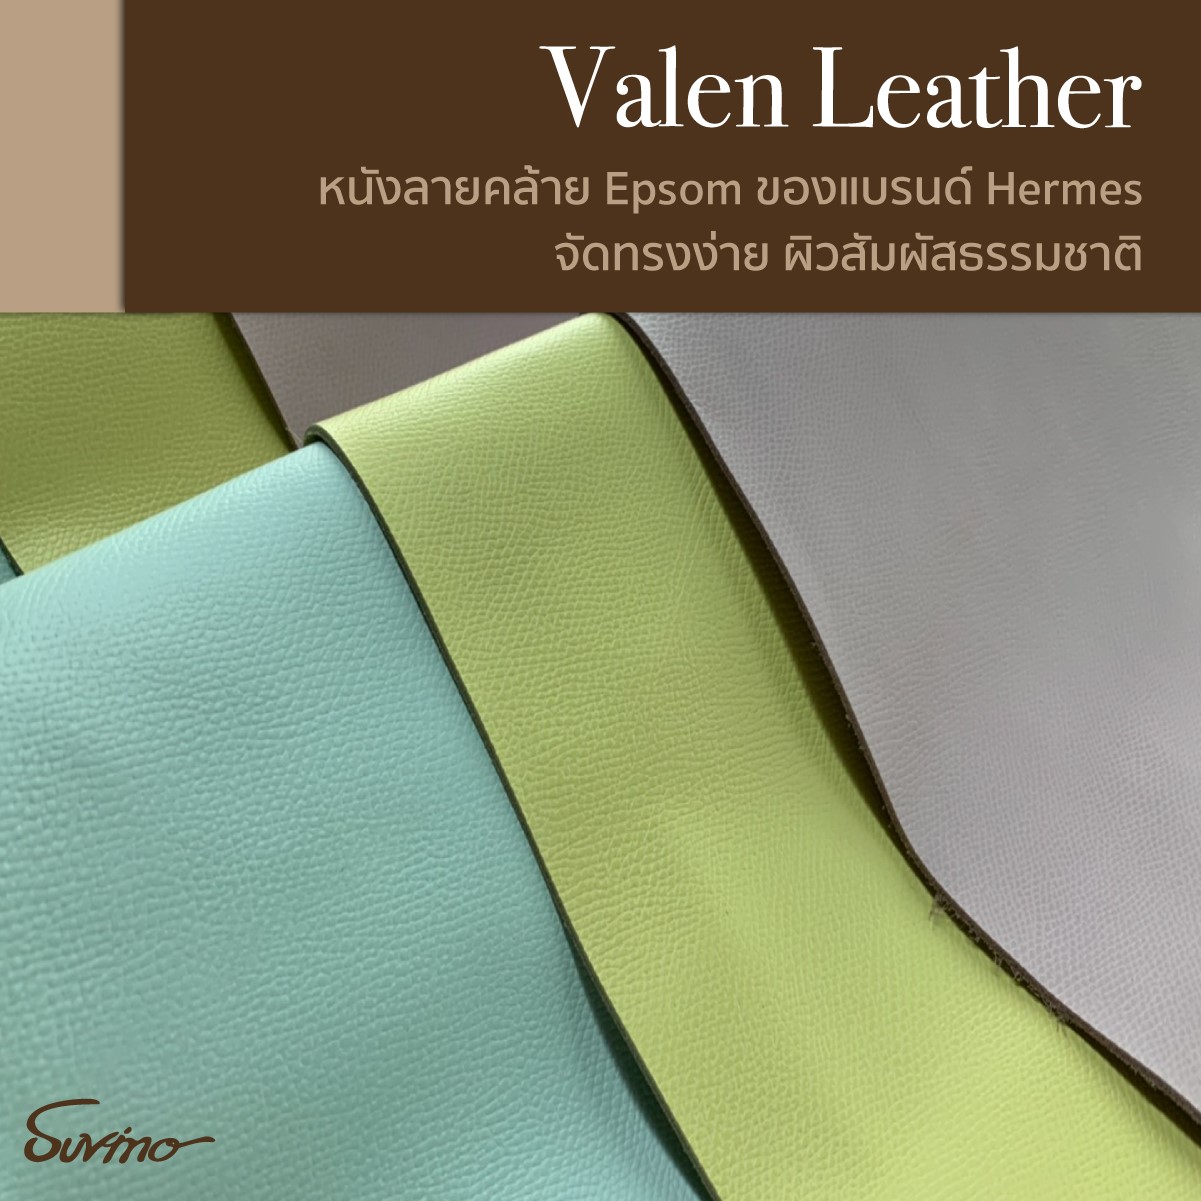 Valen Leather